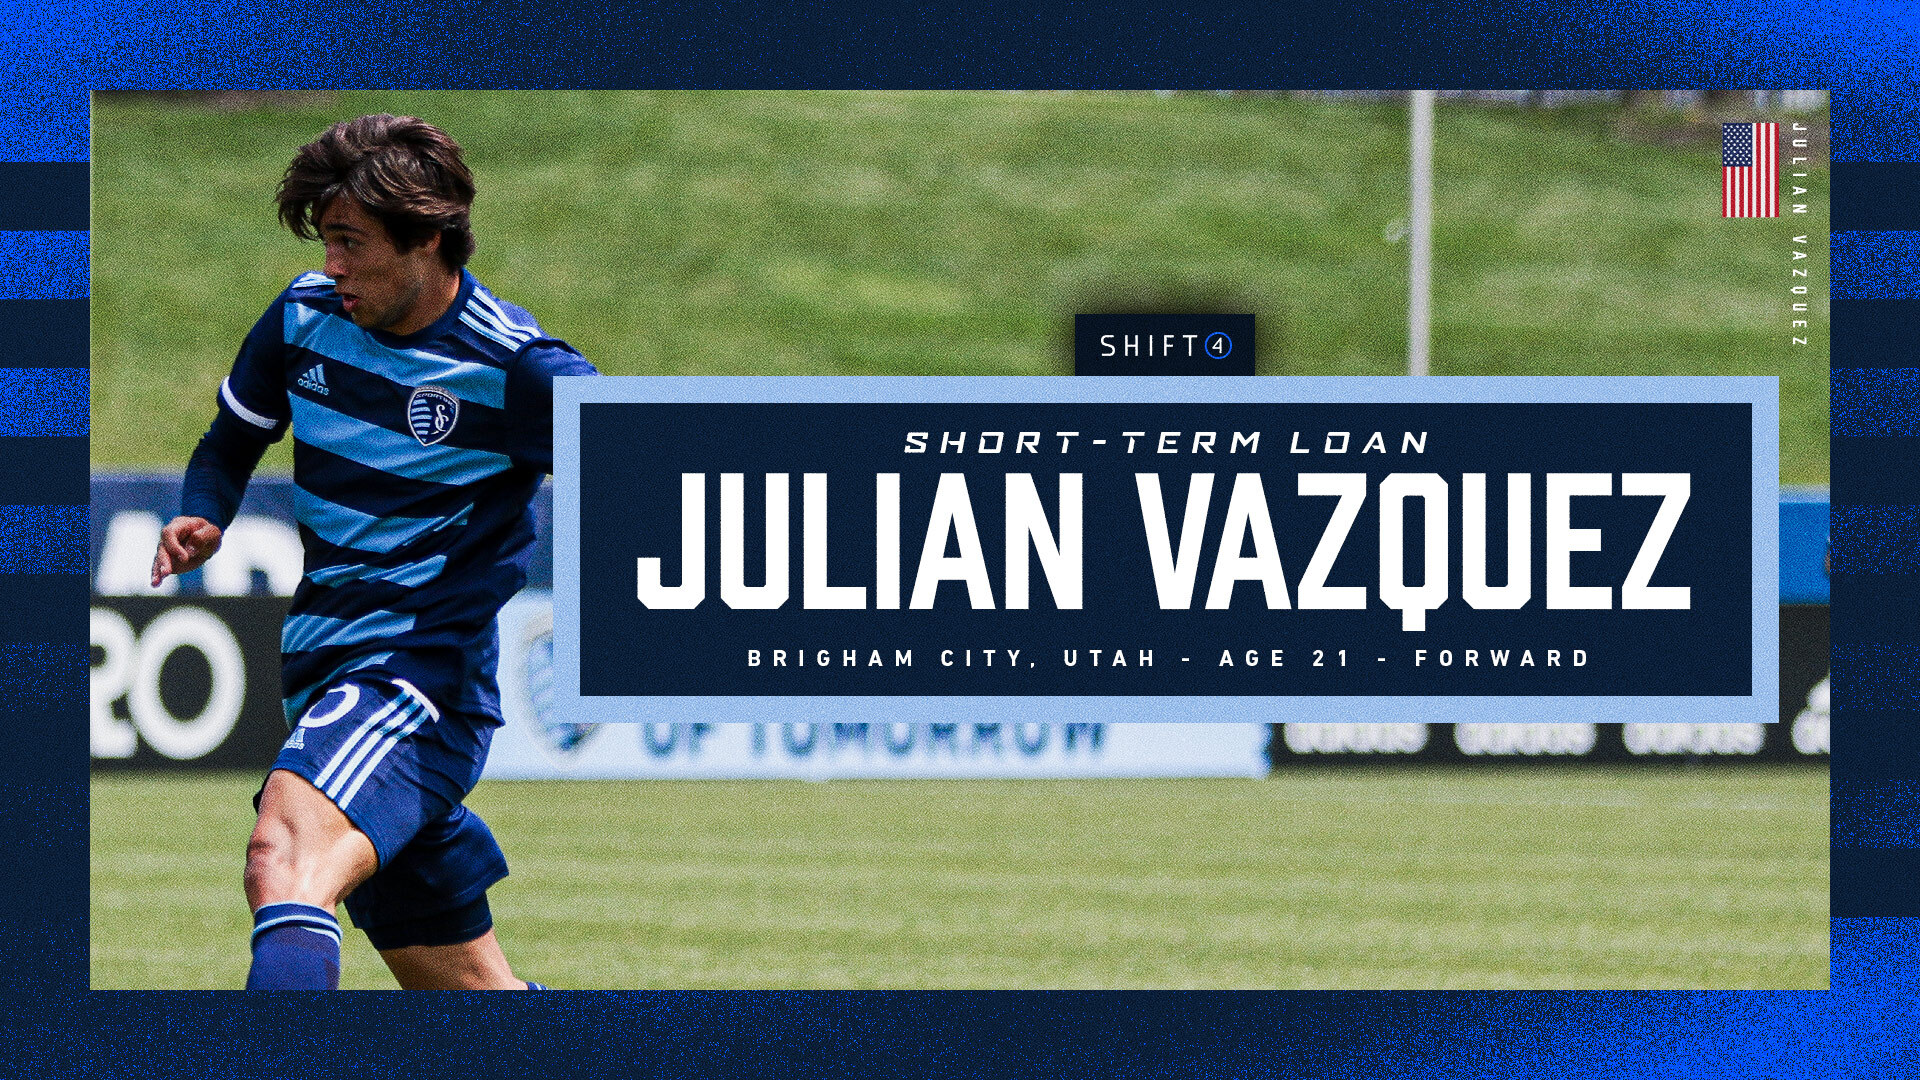   
																Winger Julian Vazquez back with Sporting KC on short-term loan 
															 